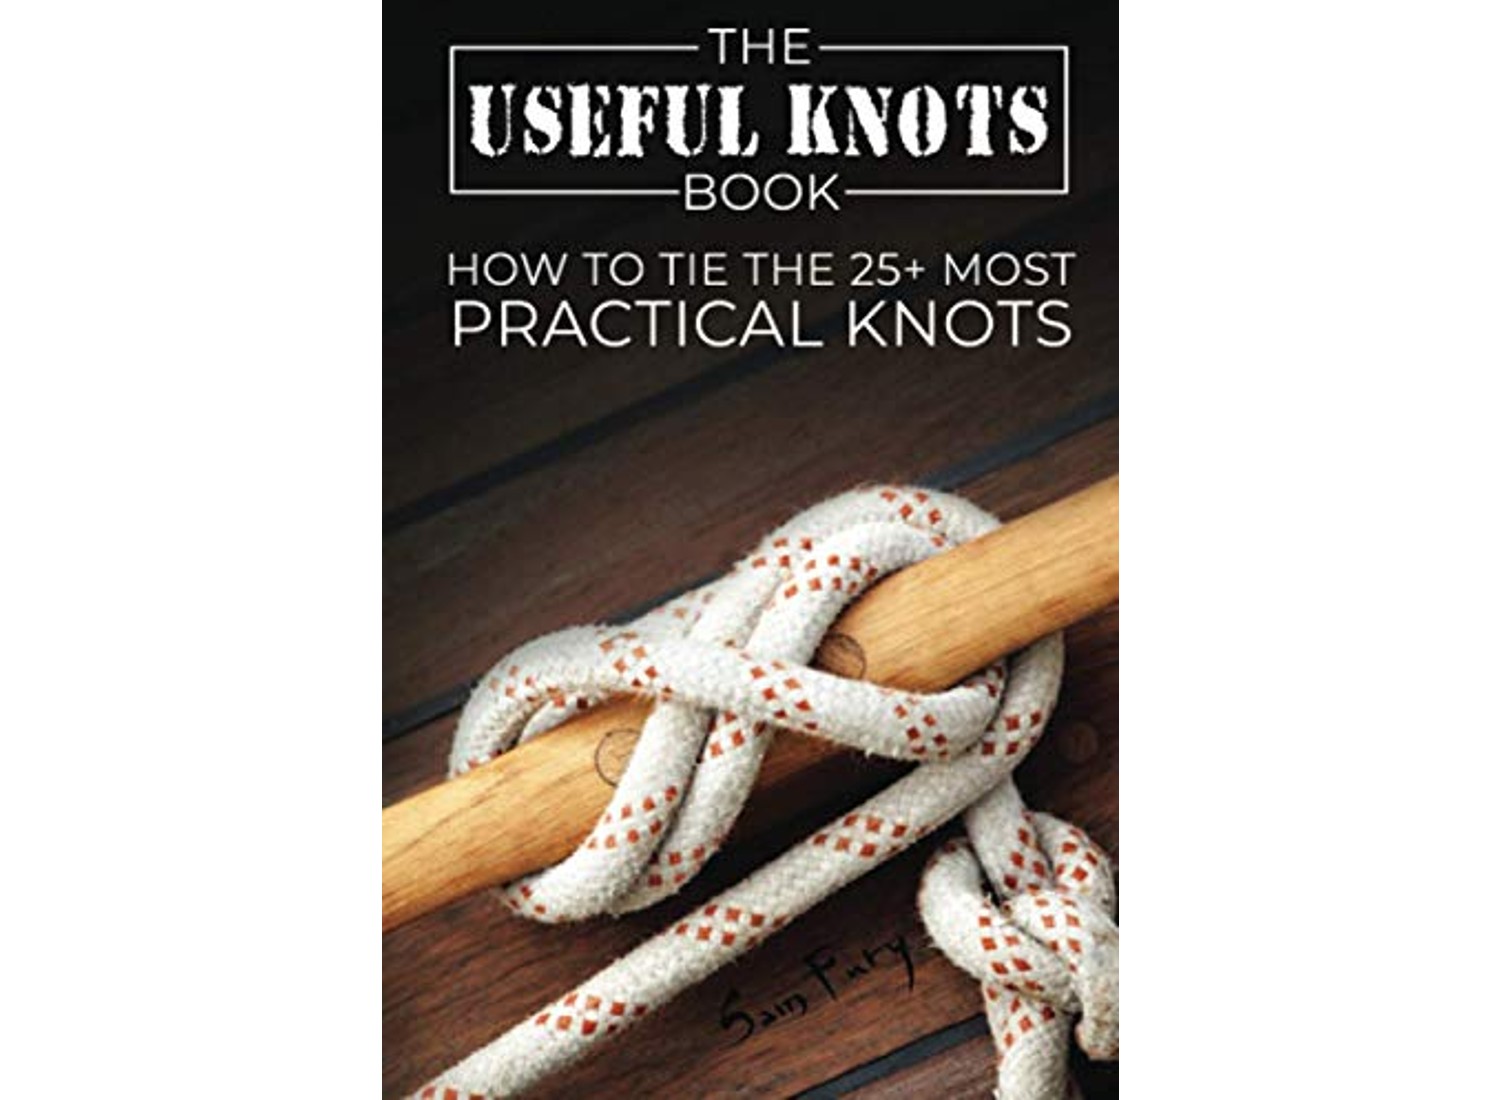 knots book review